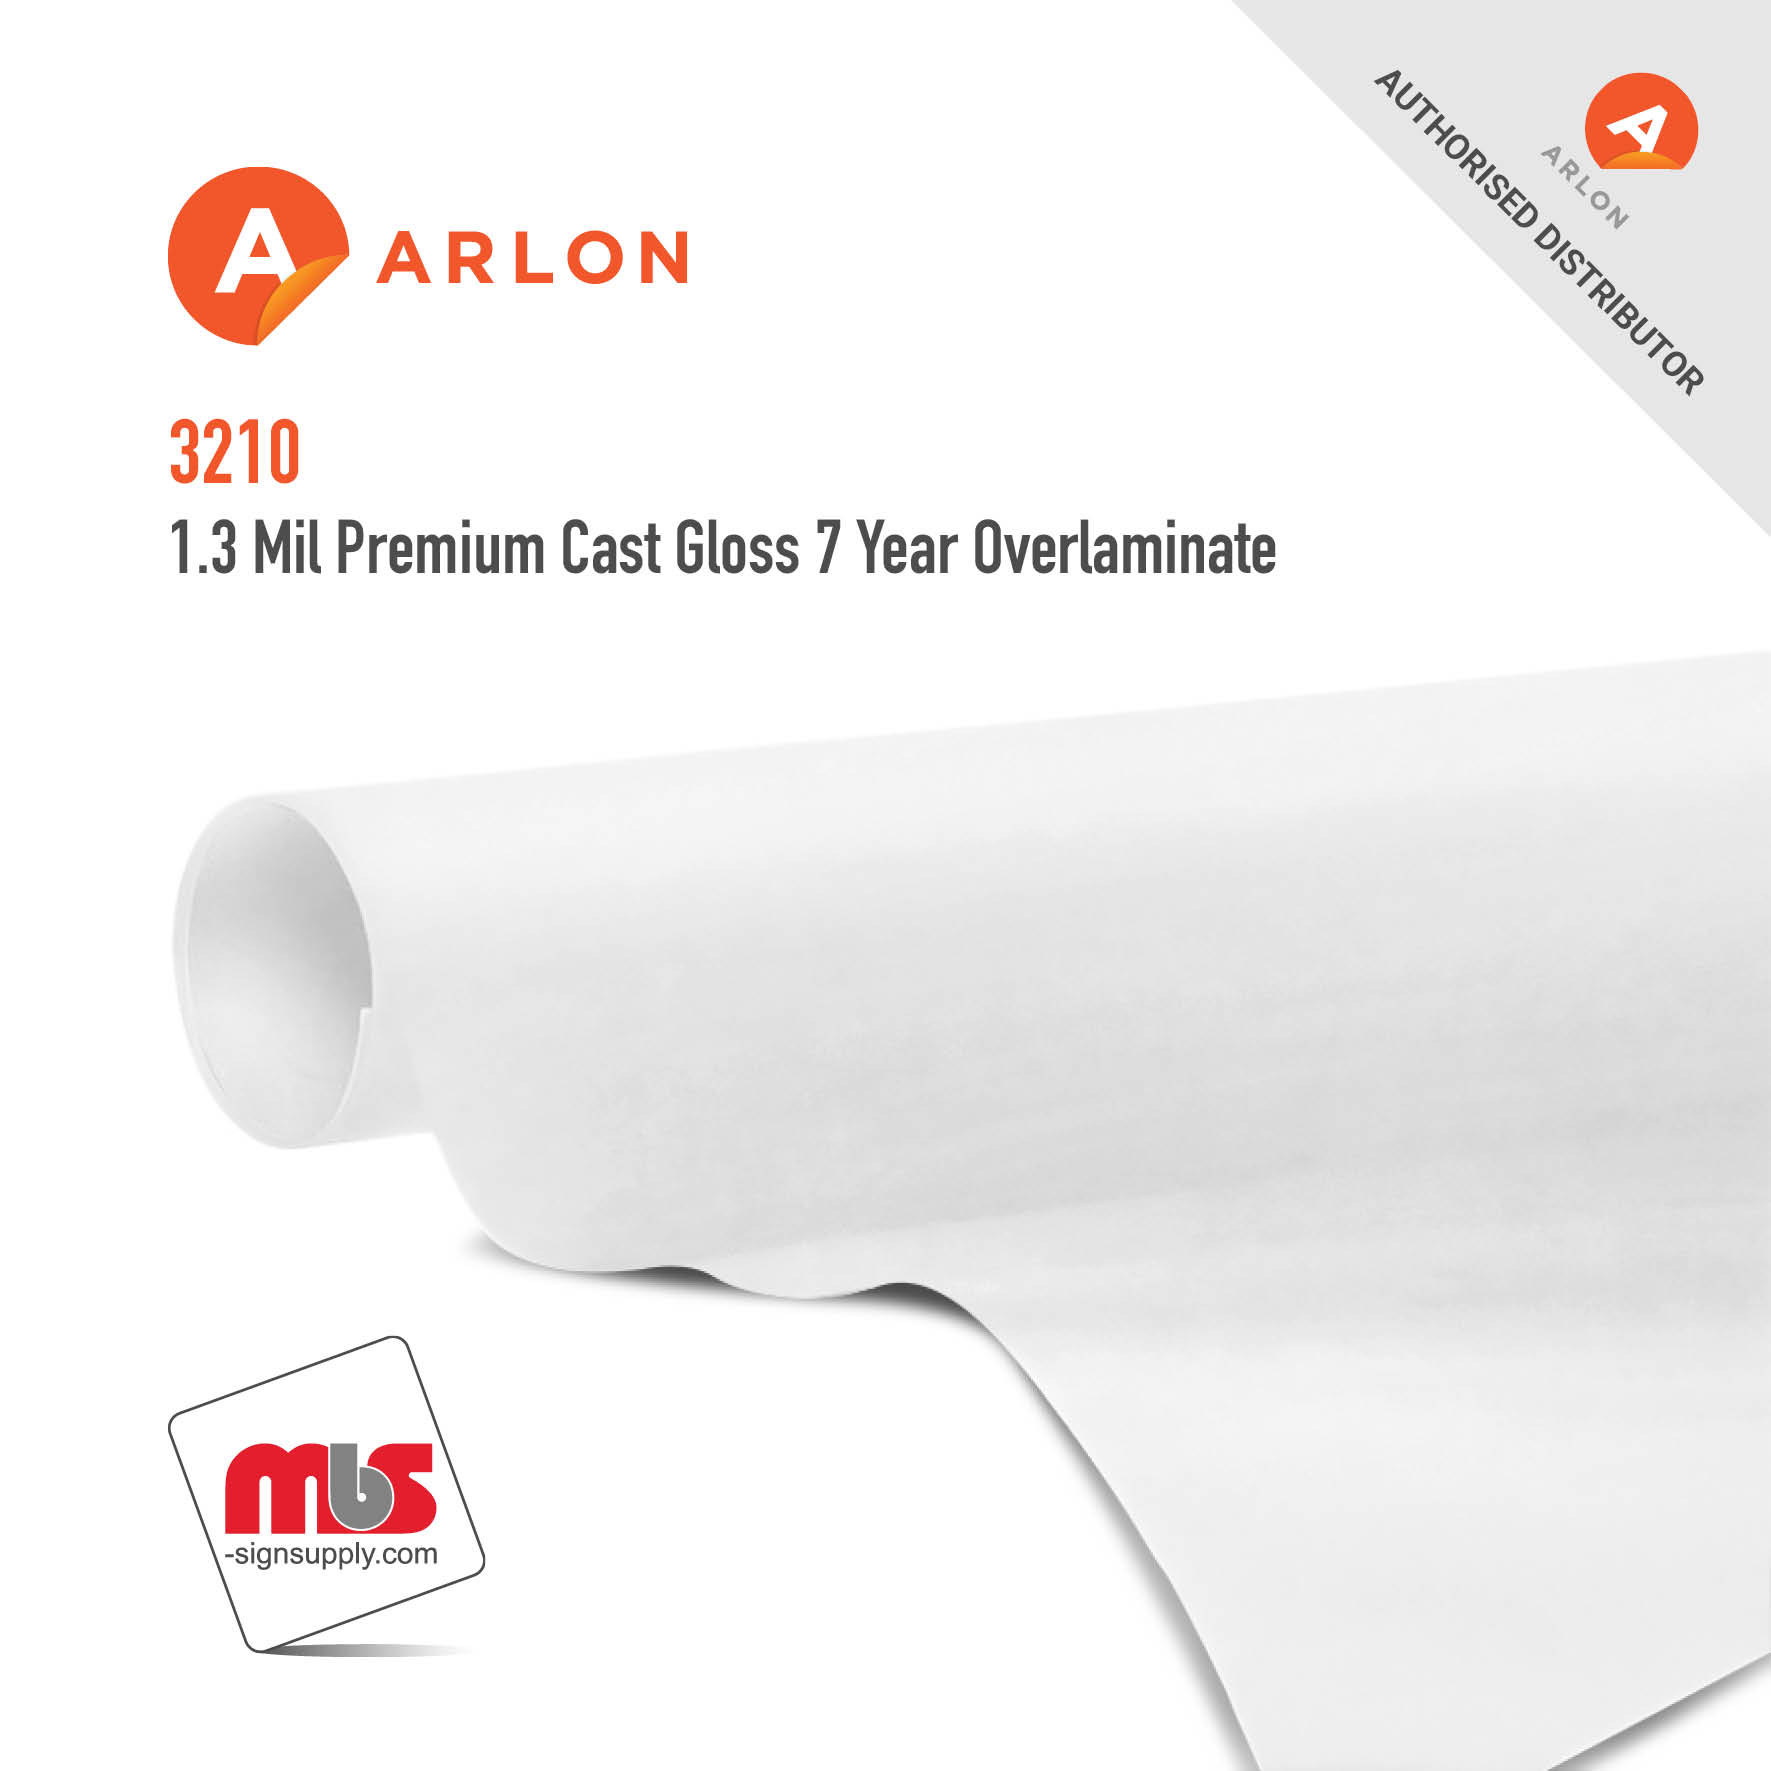 60'' x 50 Yard Roll - Arlon 3710 1.3 Mil Premium Cast Gloss 7 Year Overlaminate